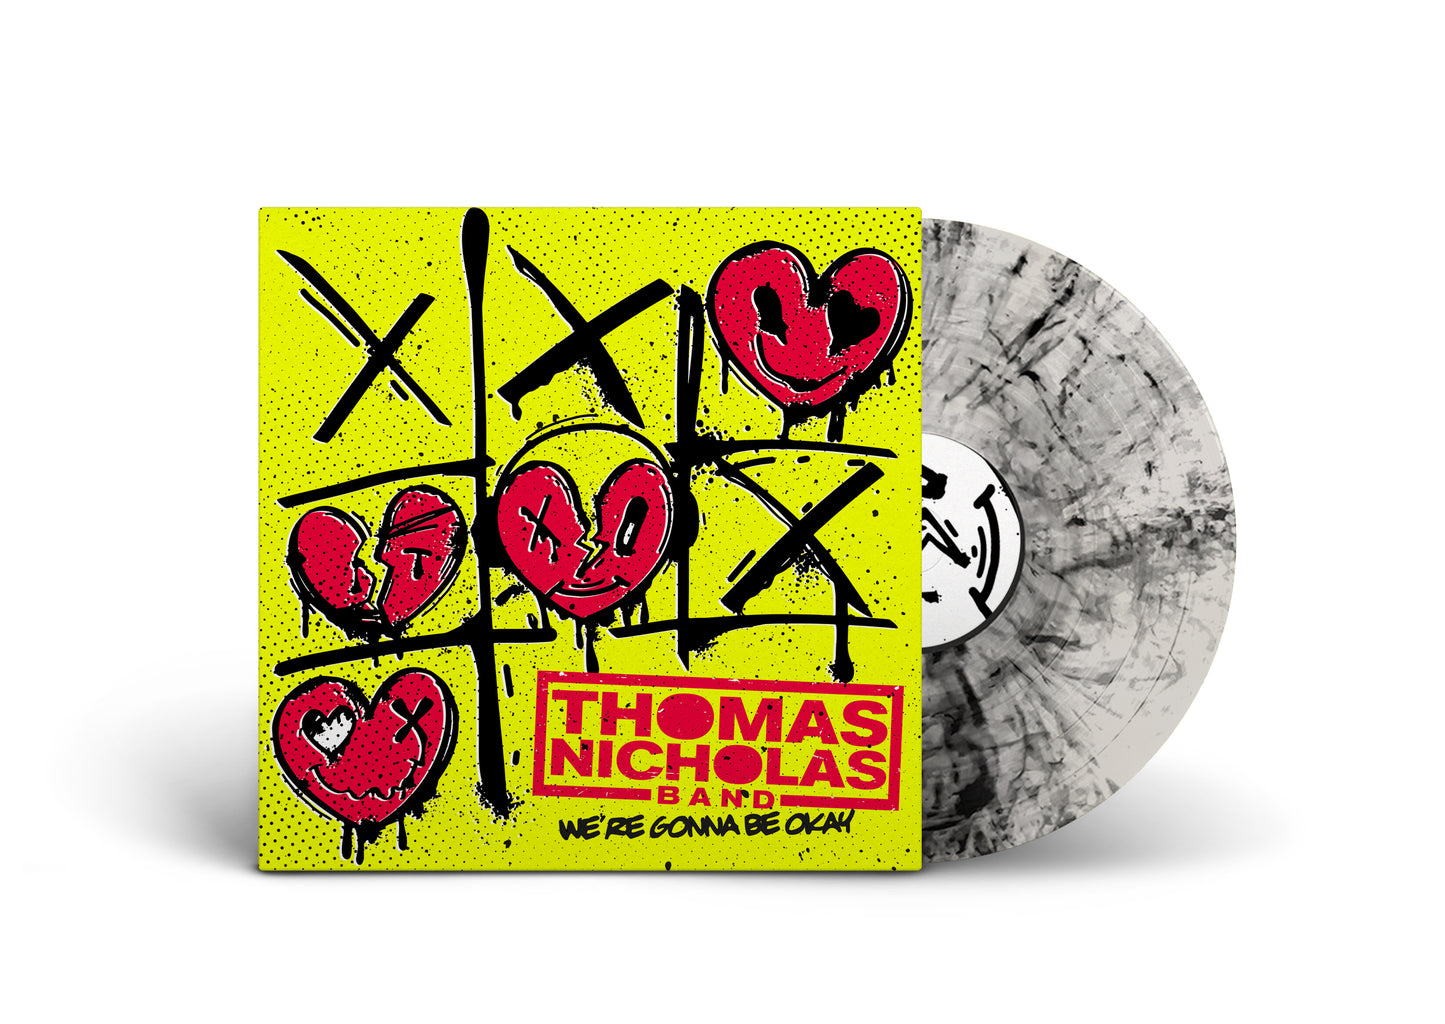 THOMAS NICHOLAS BAND - "We're Gonna Be Okay" (SBAM) (LP)